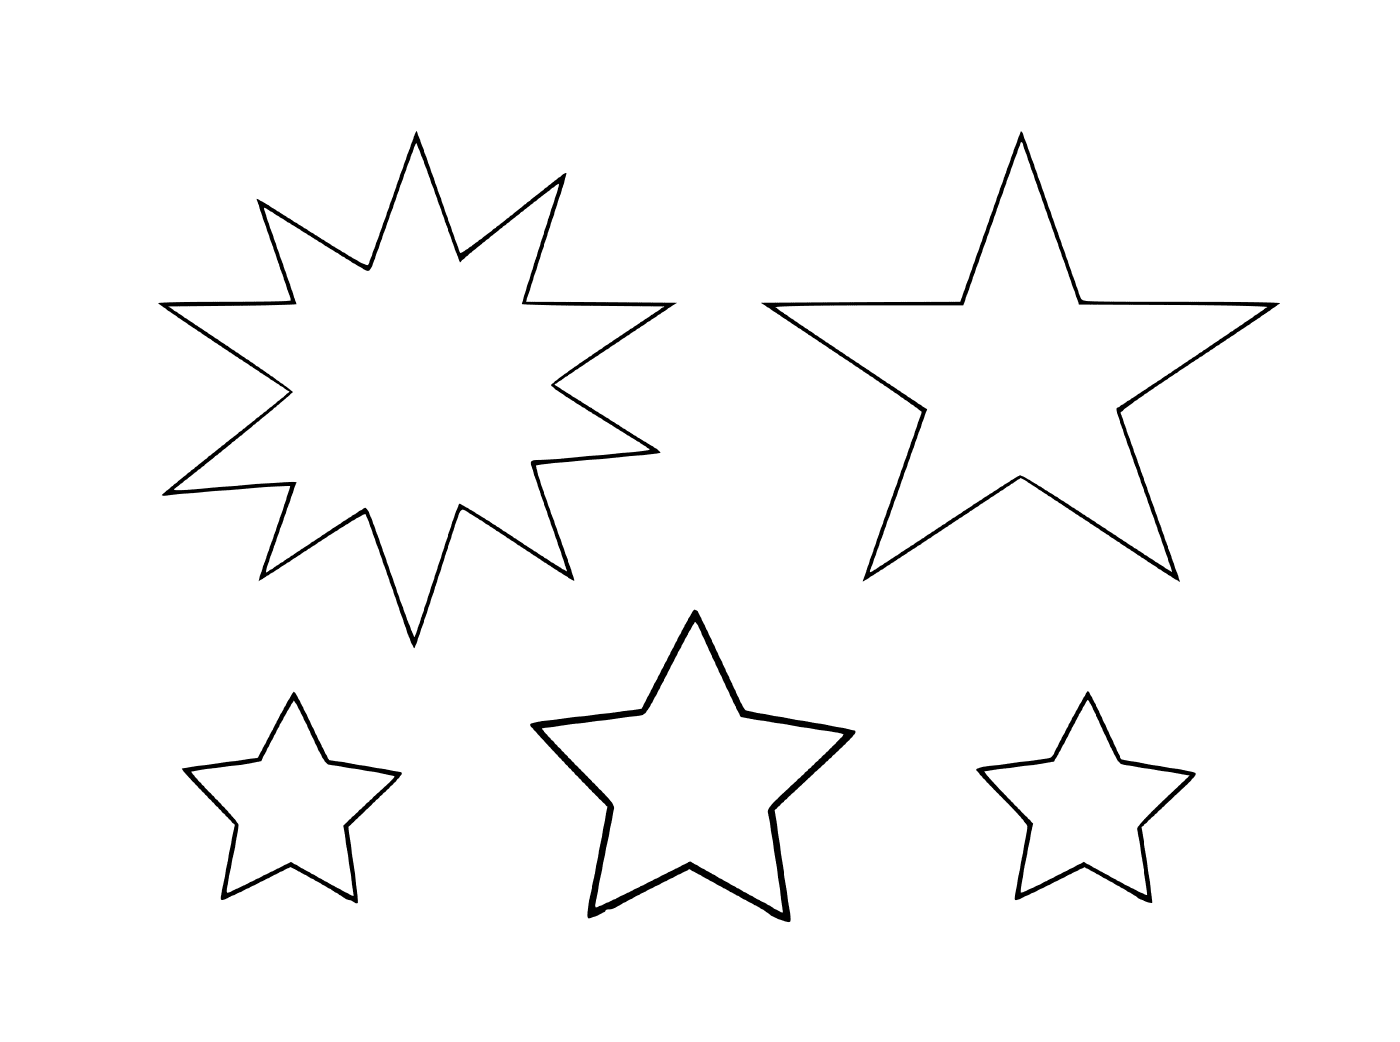  A set of six different stars 